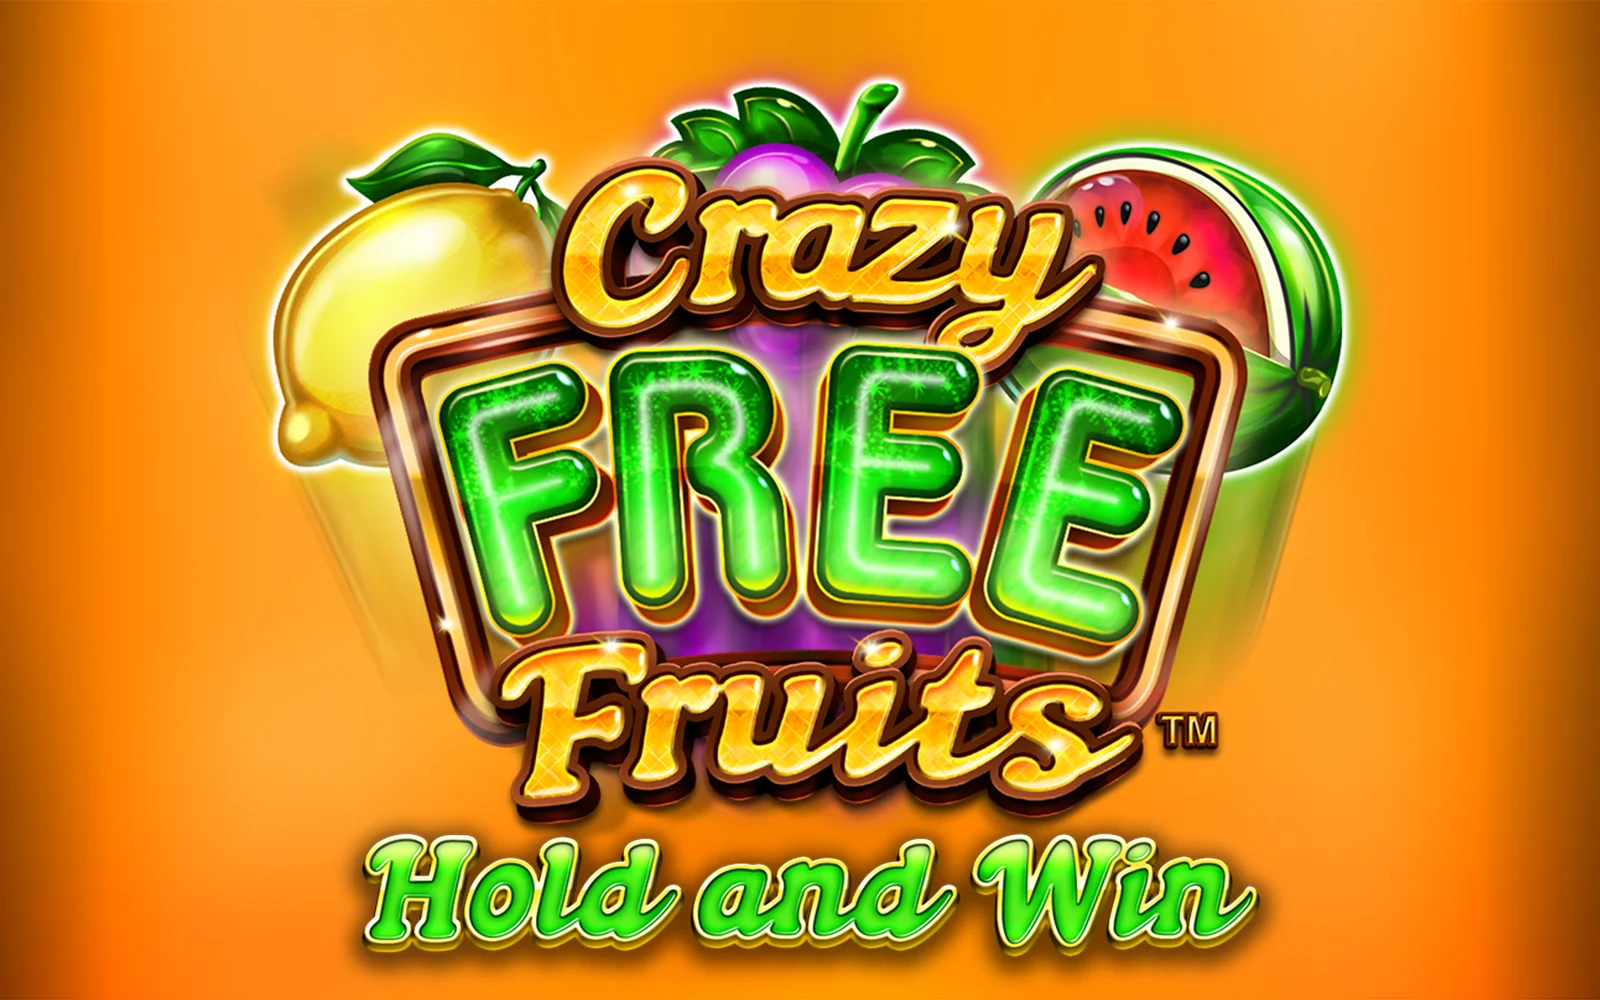 Juega a Crazy Free Fruits en el casino en línea de Starcasino.be